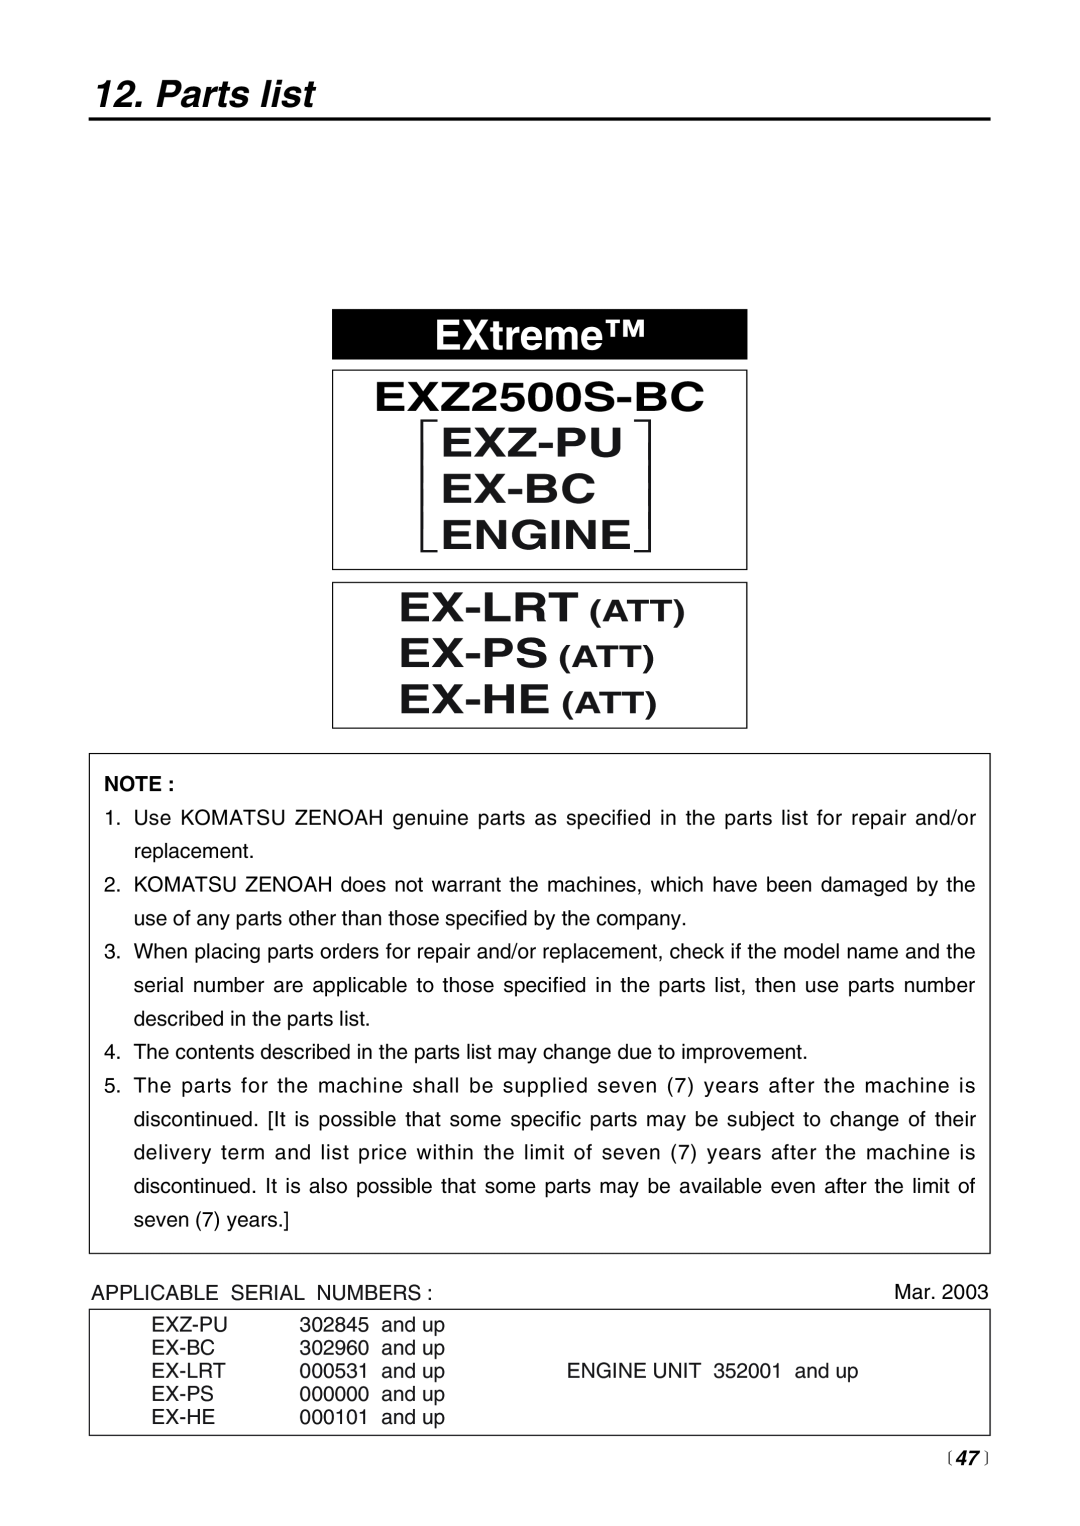 RedMax manual Parts list, EXtreme, EXZ2500S-BC EXZ-PU ,  Ex-Bc   Engine, Ex-Lrt Att Ex-Ps Att Ex-He Att 